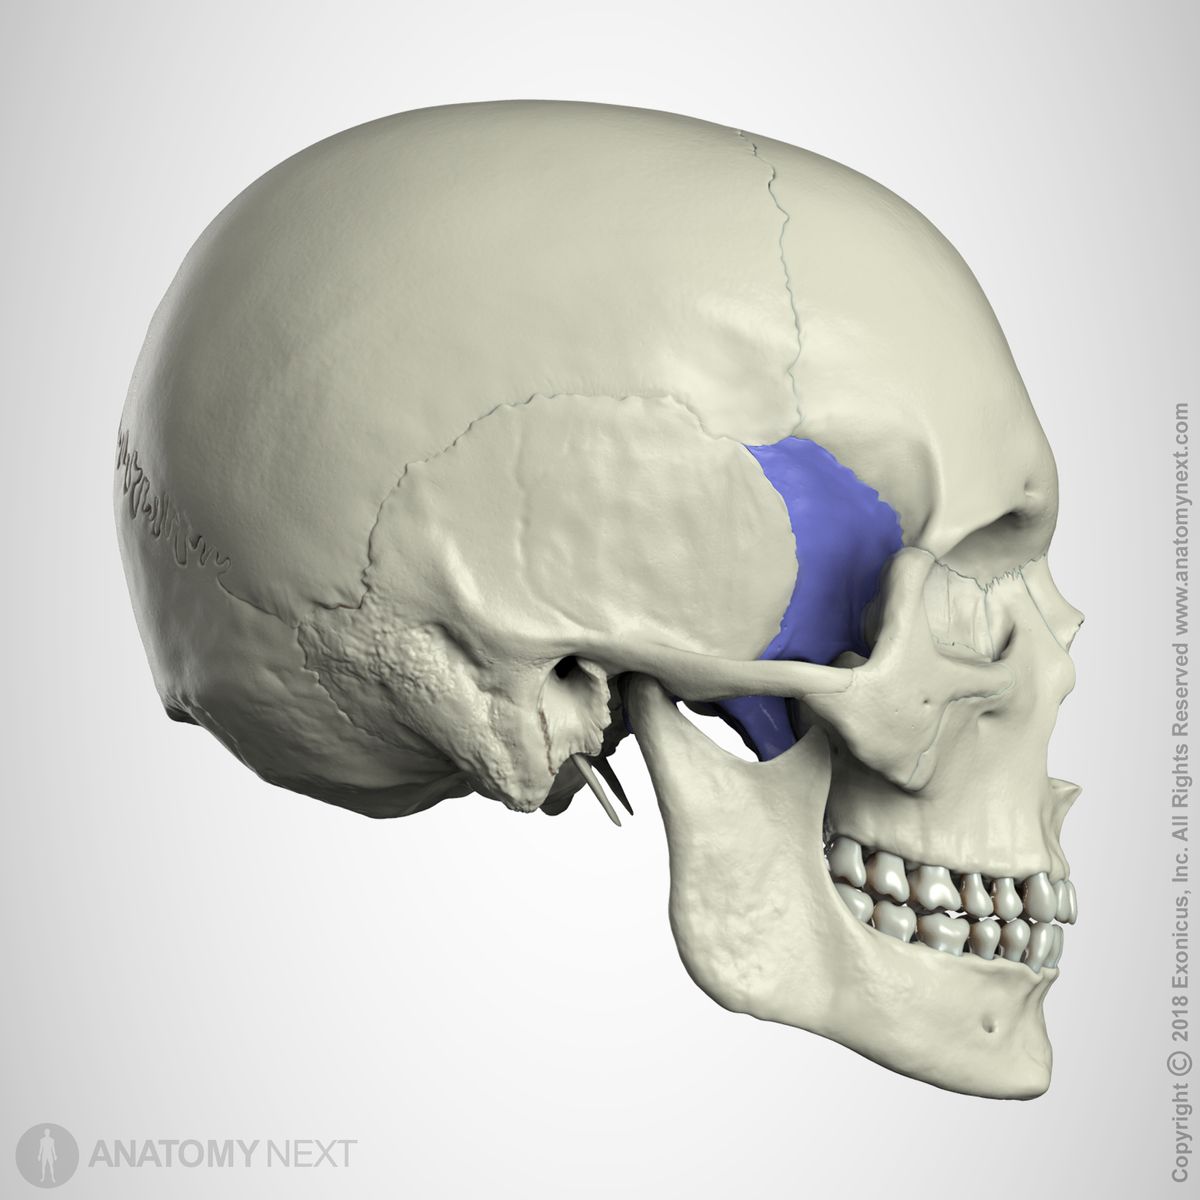 Skull, sphenoid bone colored purple, lateral view